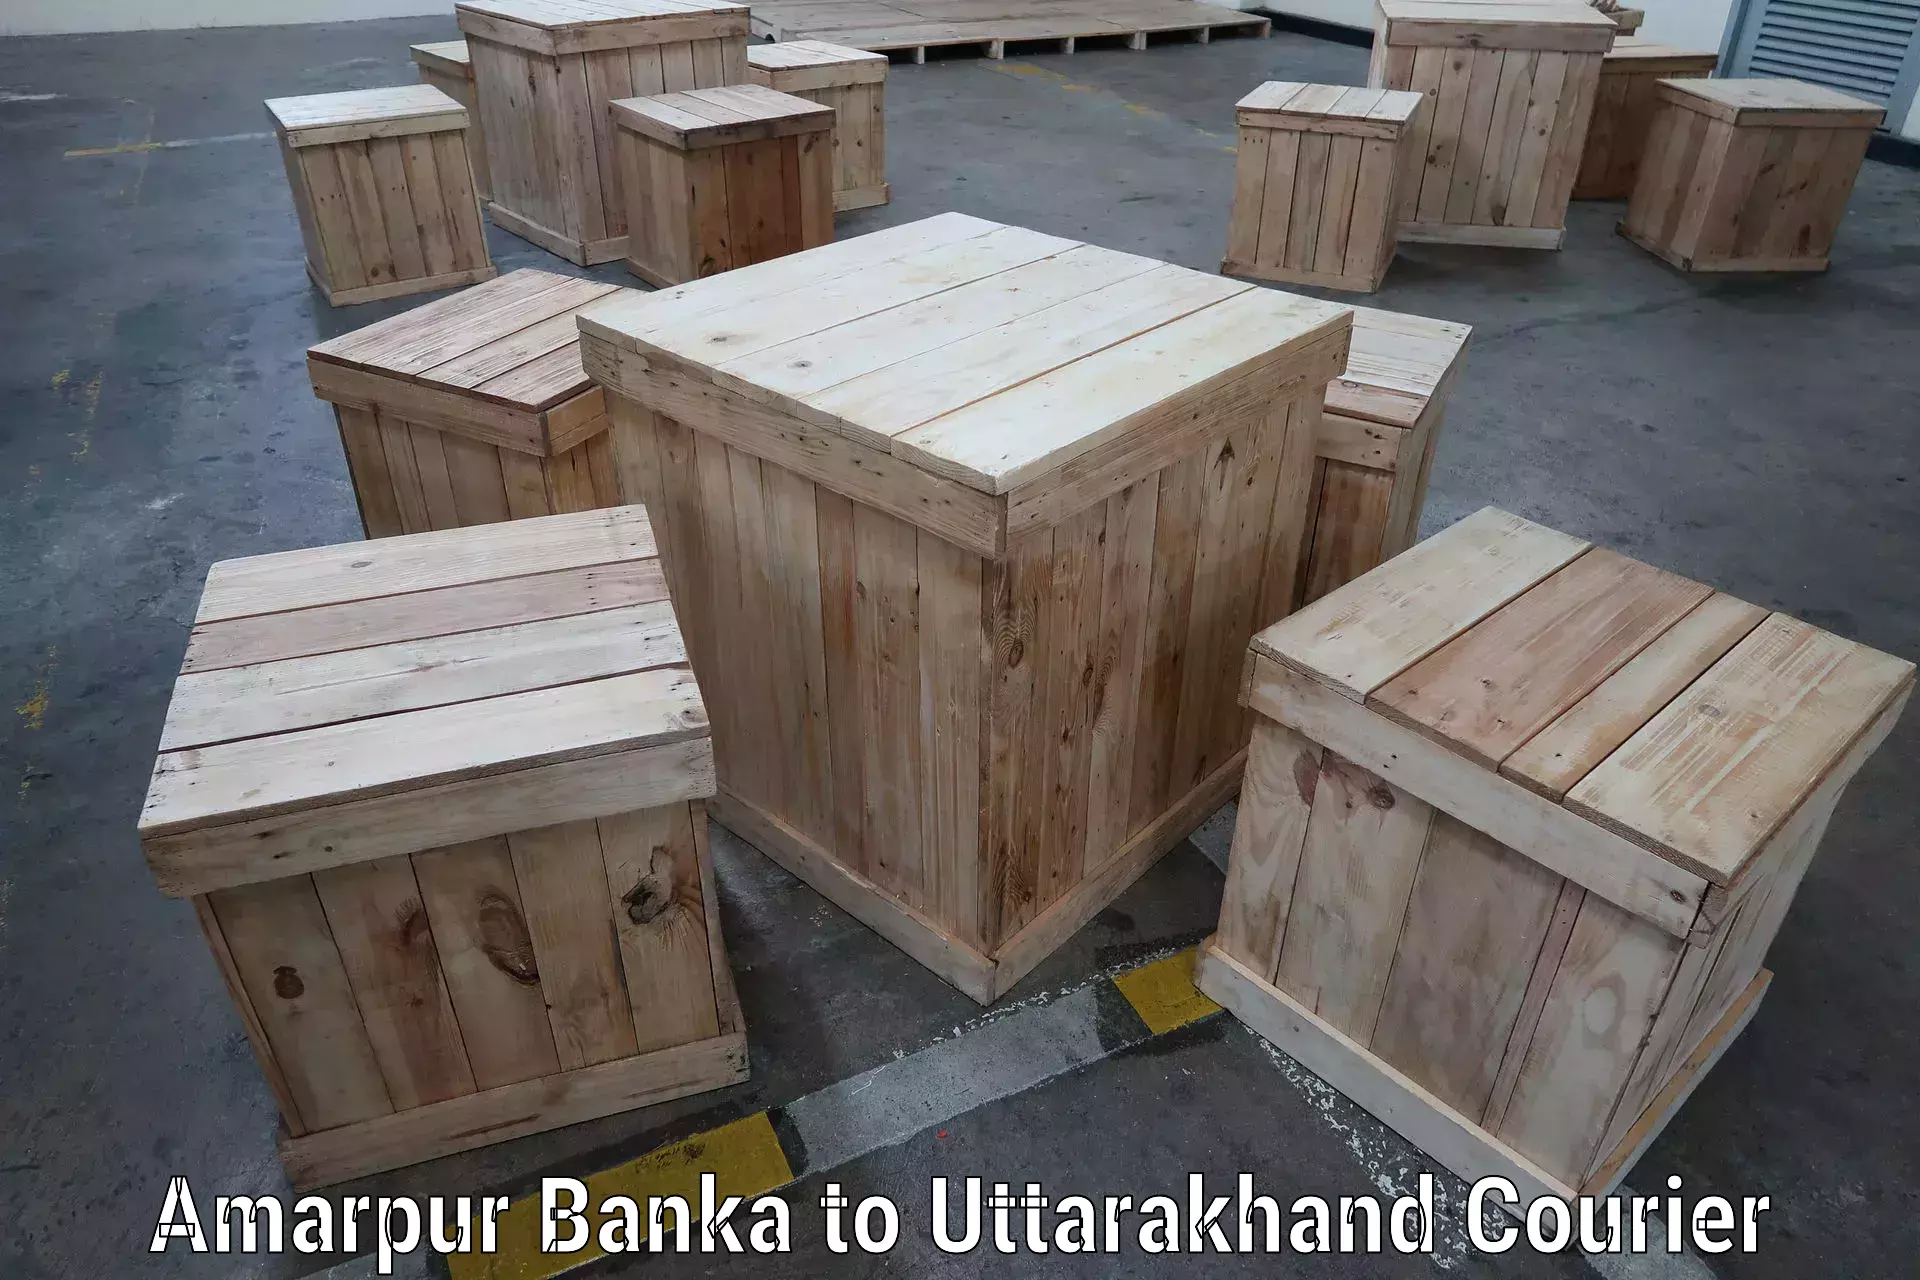 Courier service comparison Amarpur Banka to Kotdwara